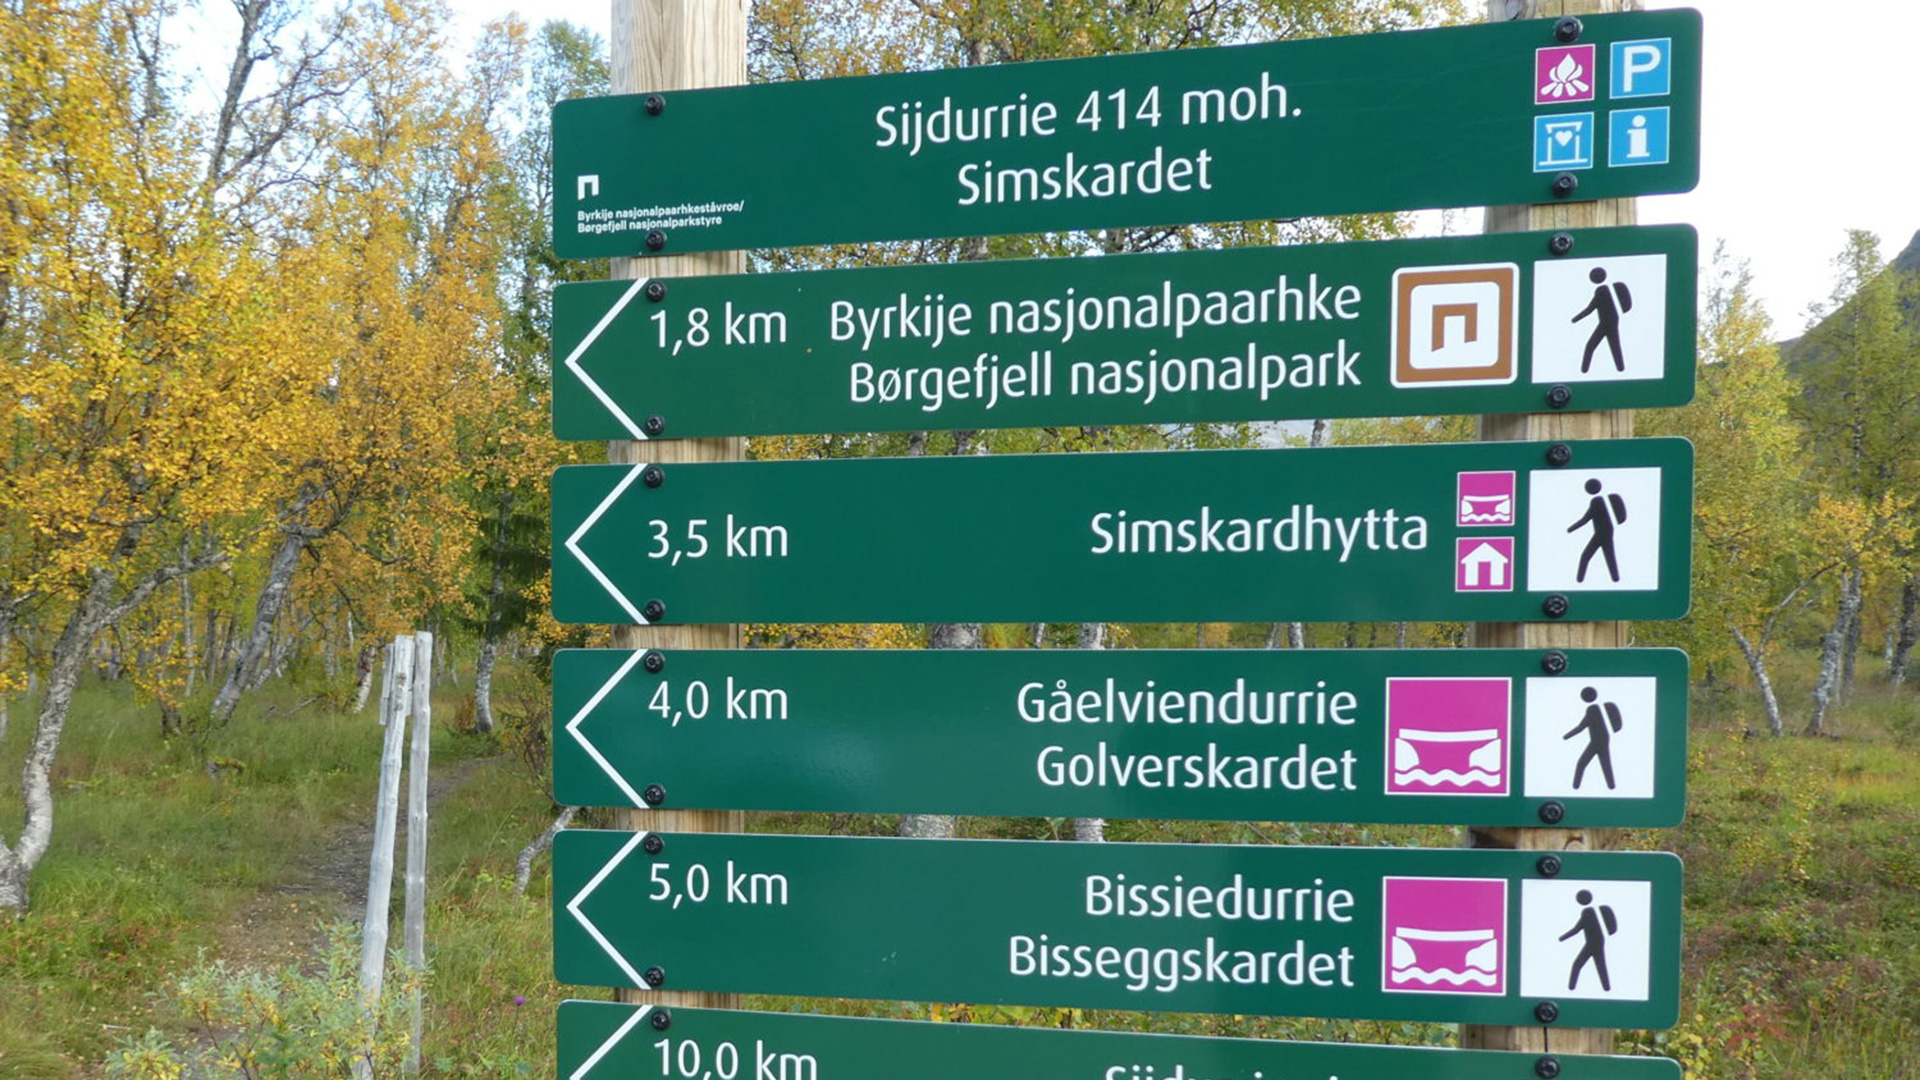 Sign that stands in Simskardet. Shows route and distances to Børgefjell National Park 1.8 km Simskardhytta 3.5 km Golverskardet 4.0 km Bissegskarder 5.0 km